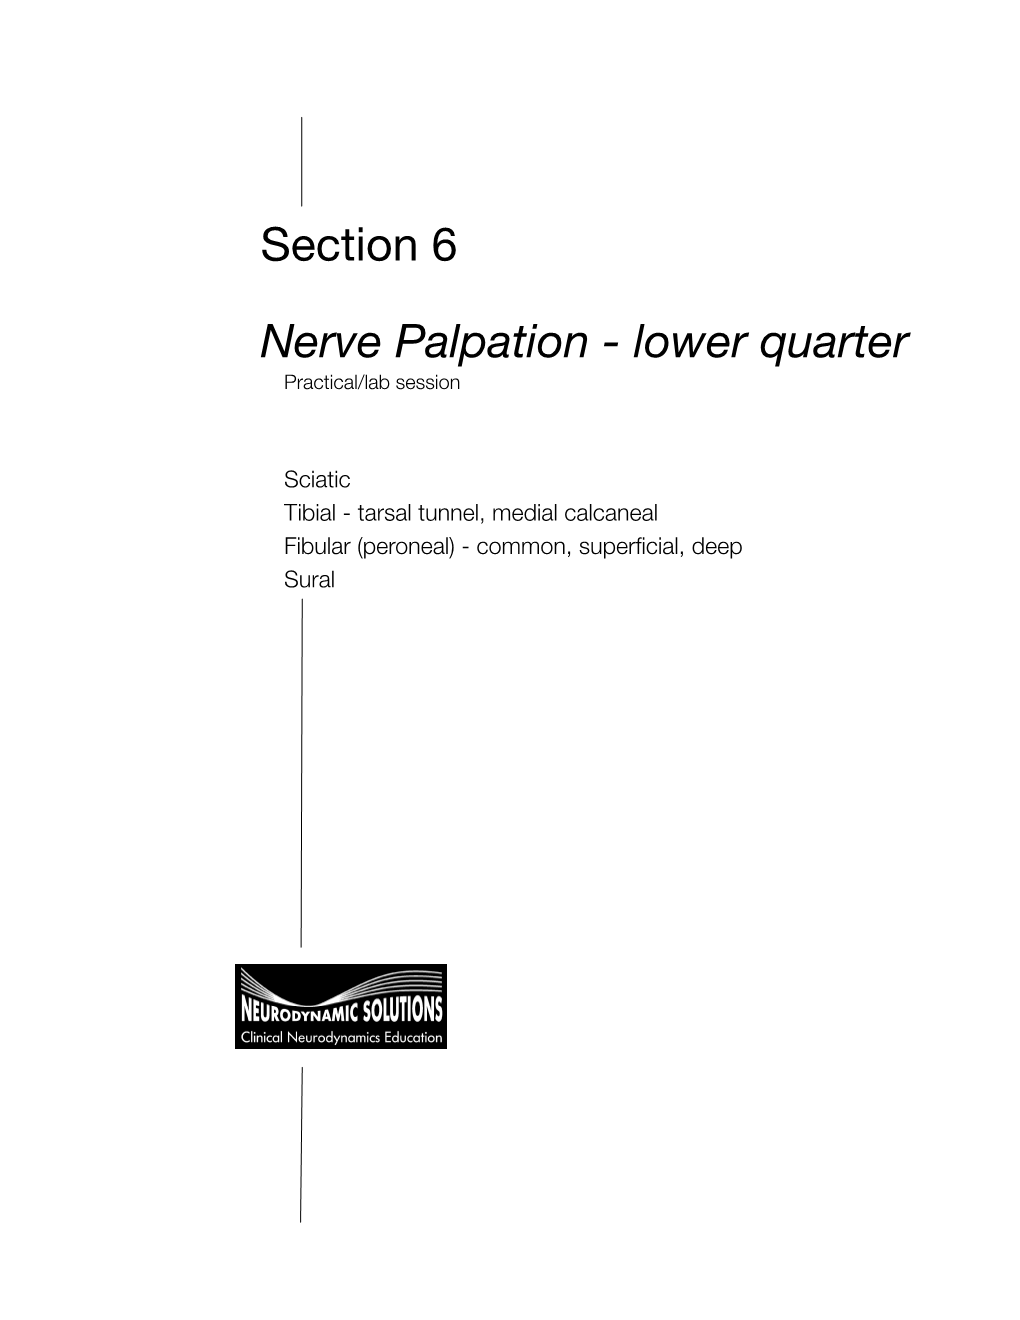 Section 6 Nerve Palpation - Lower Quarter 2